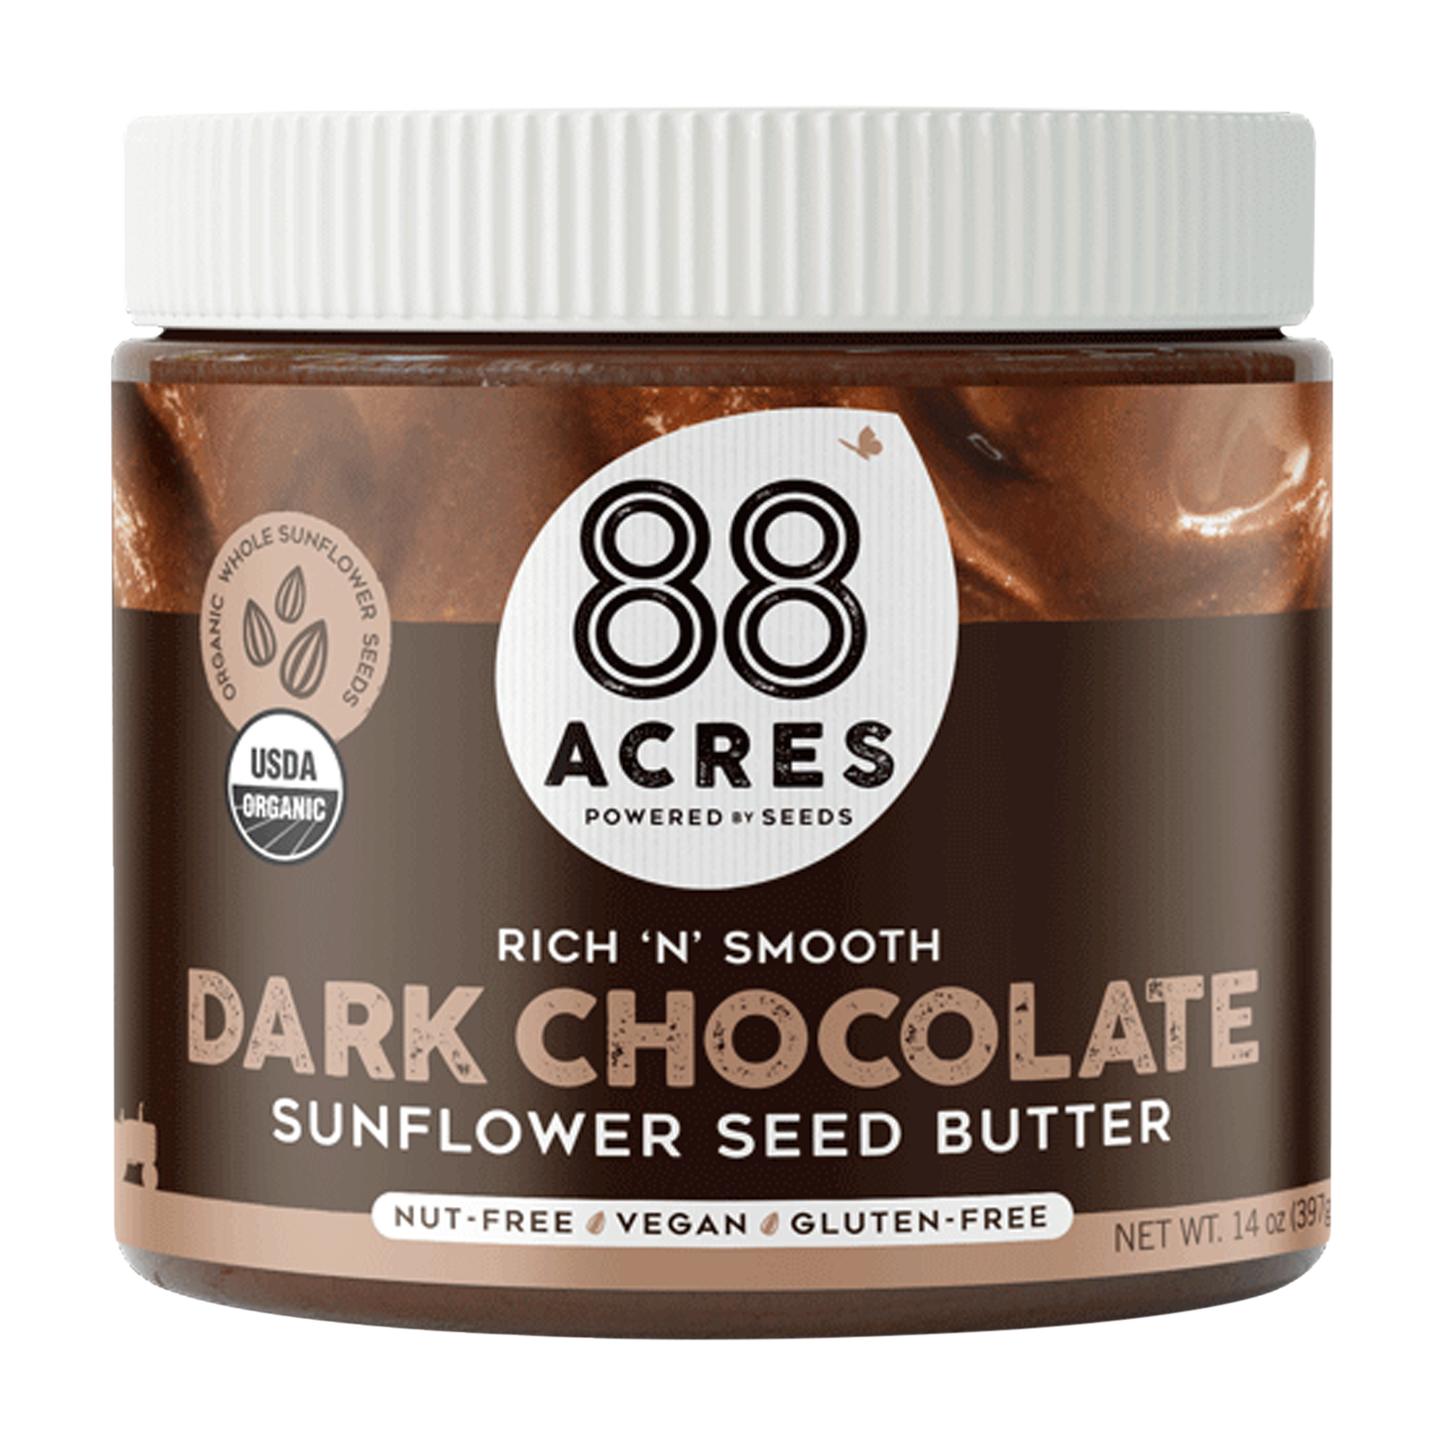 Dark Chocolate Sunflower Seed Butter Jar